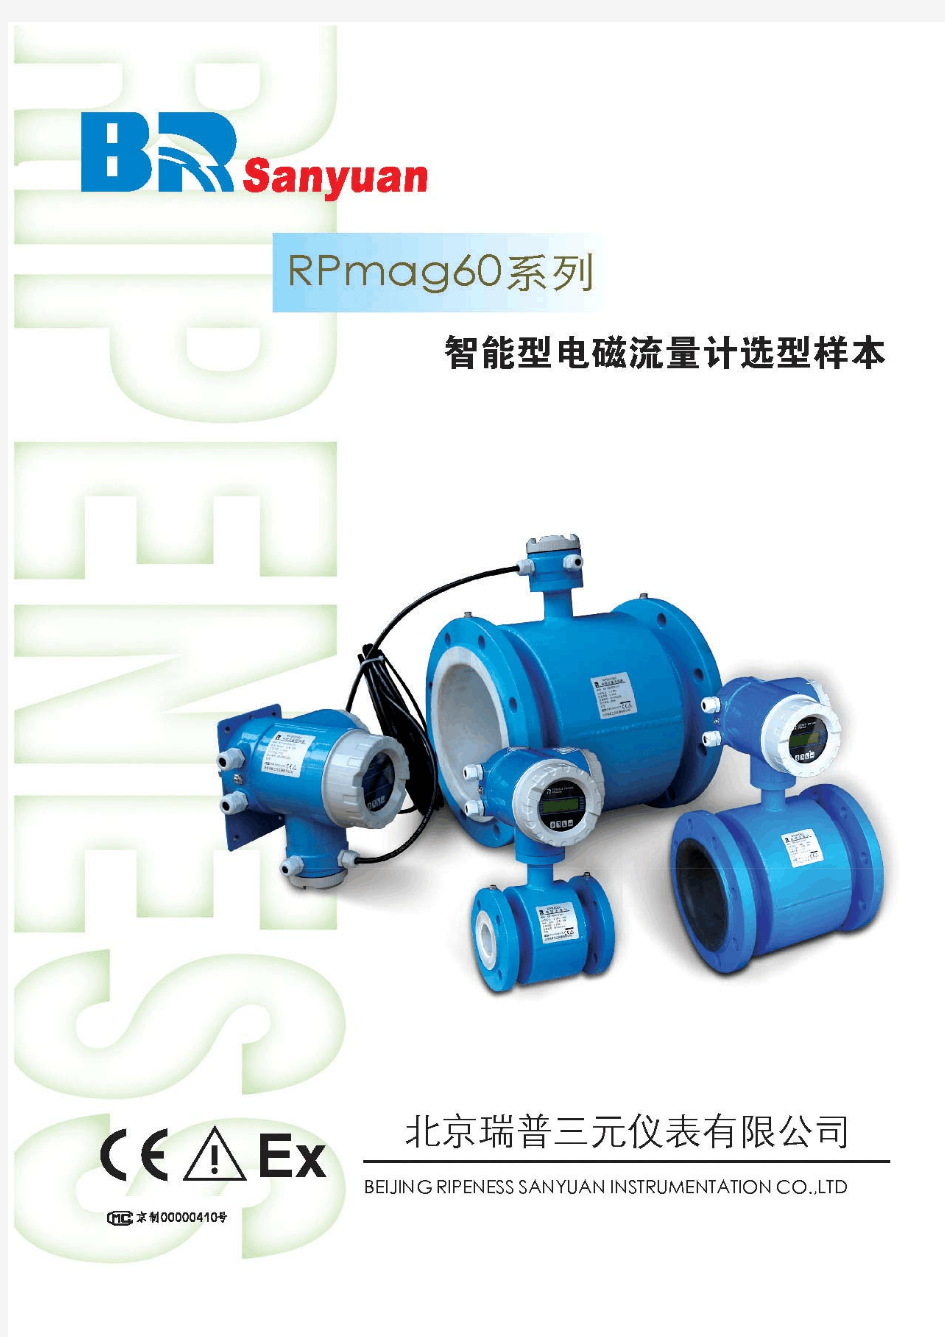 RPmag60系列智能电磁流量计